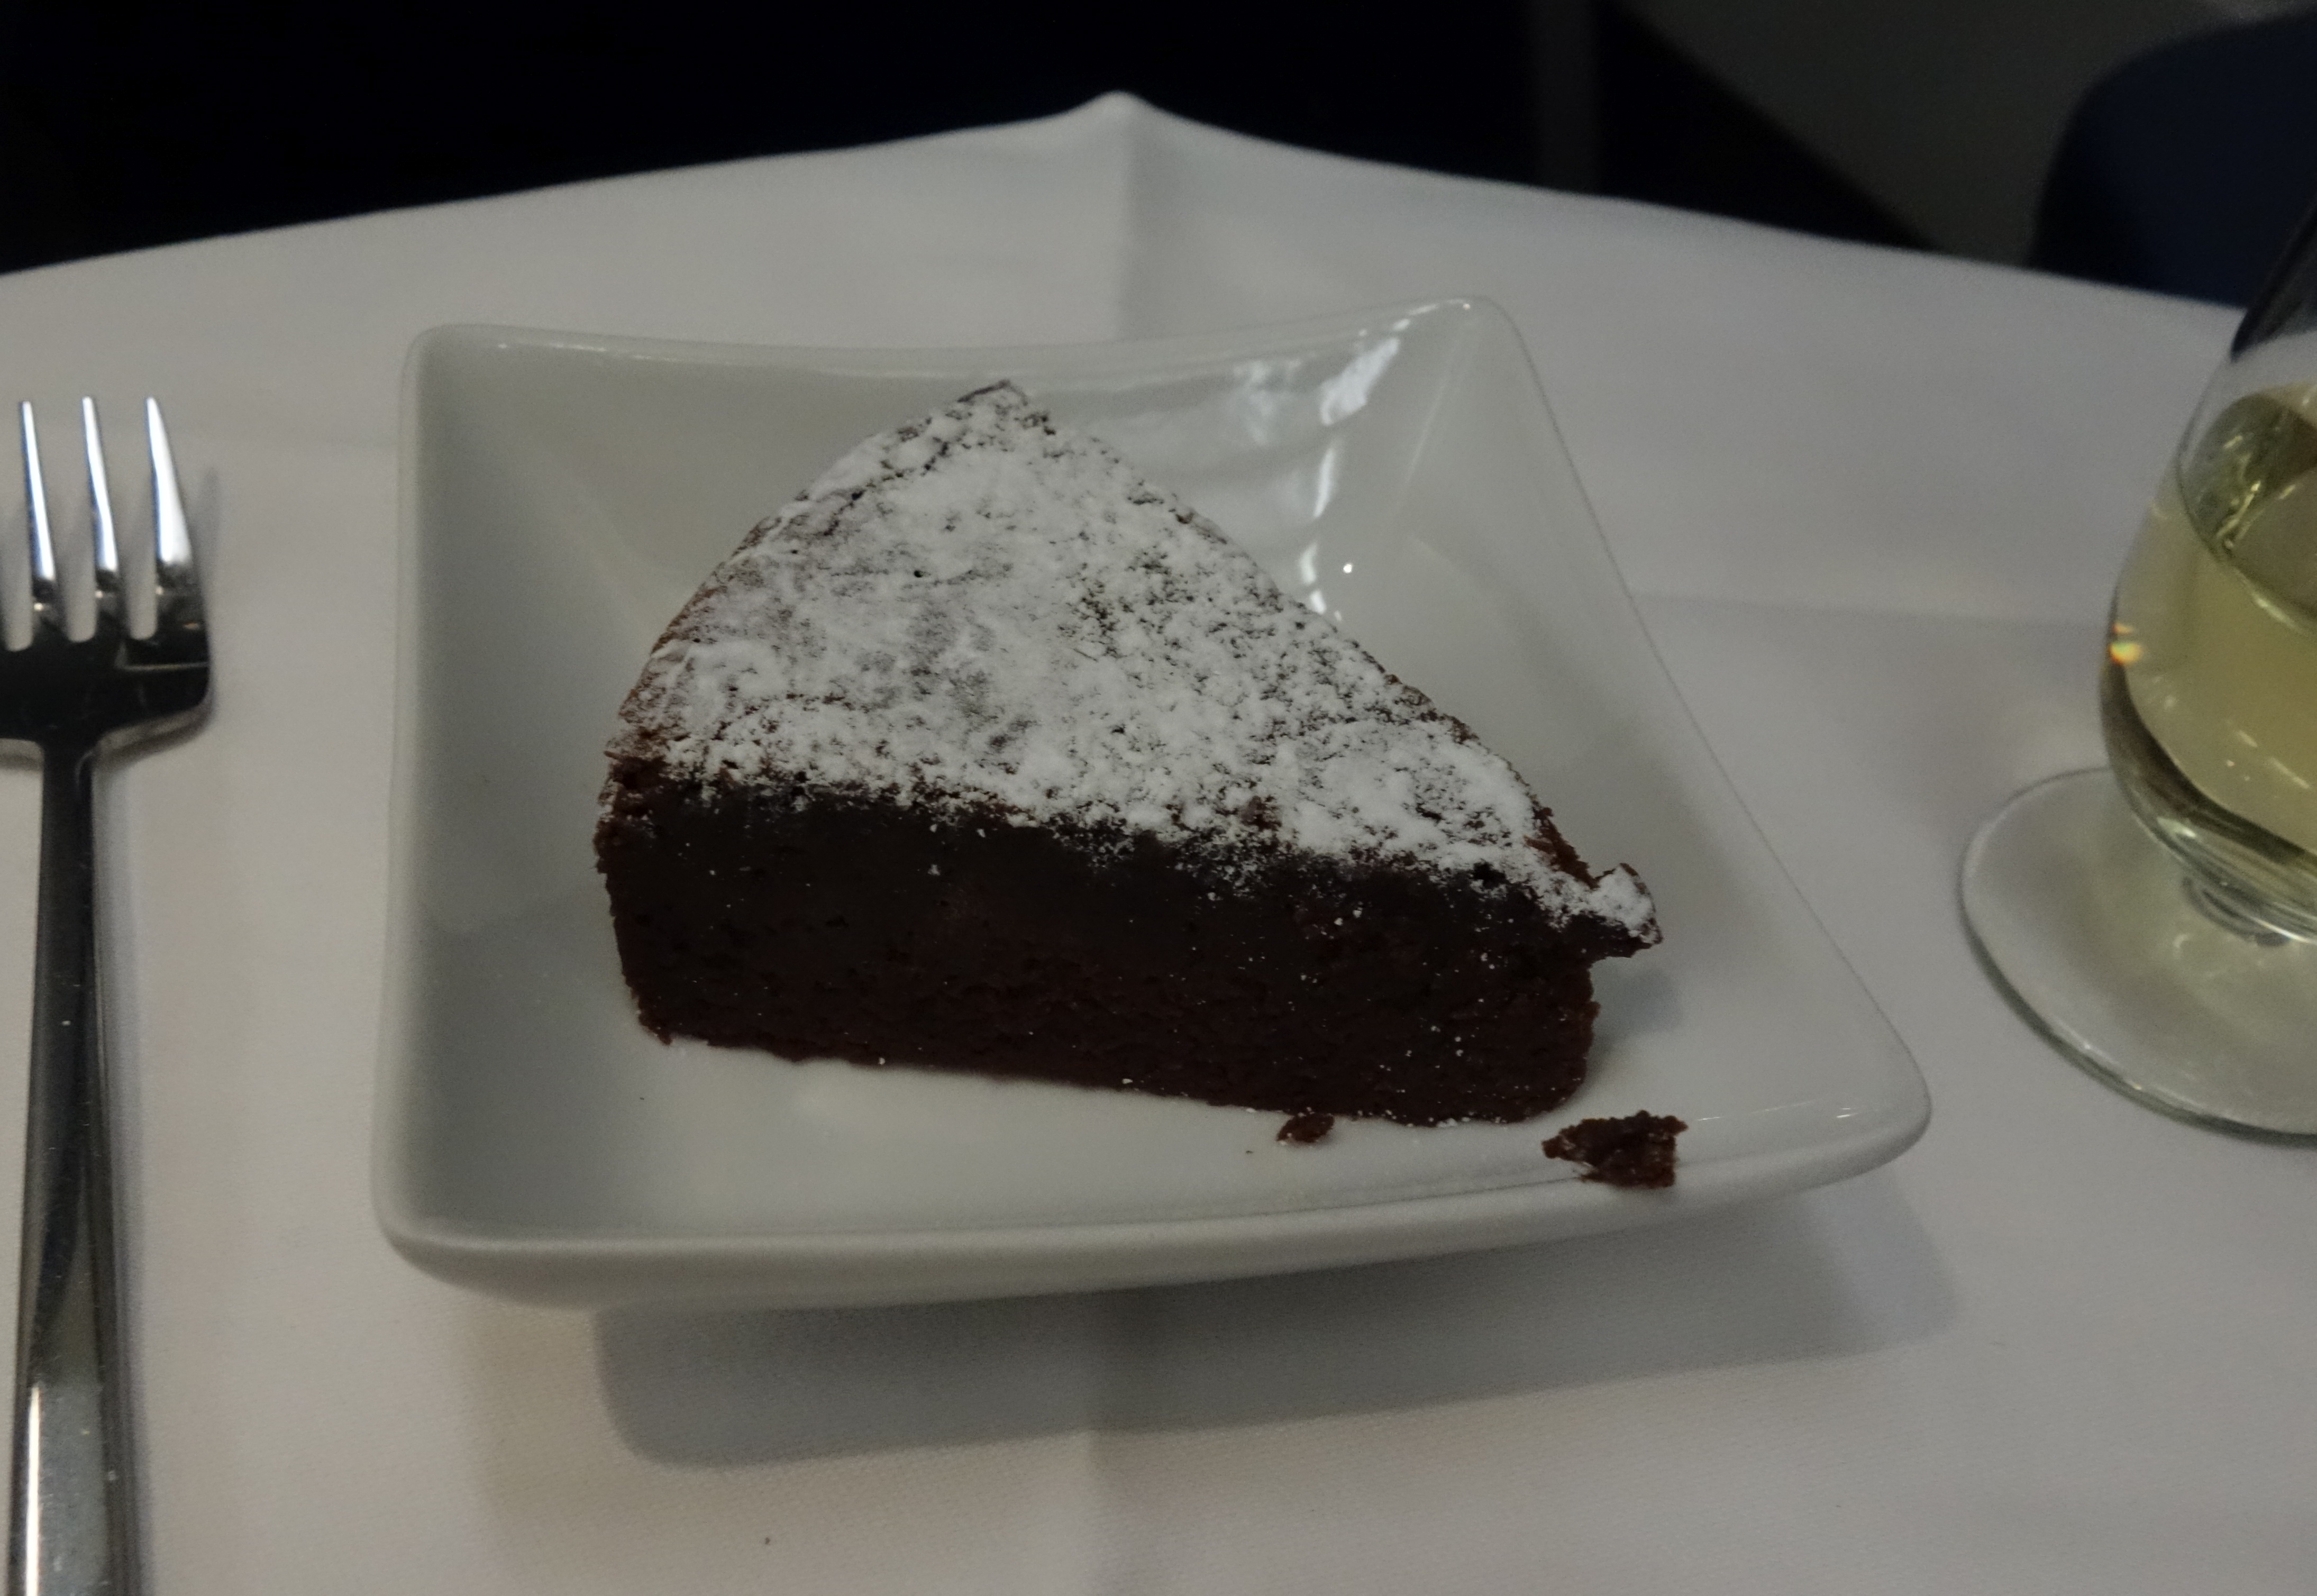 Flourless chocolate cake for dessert